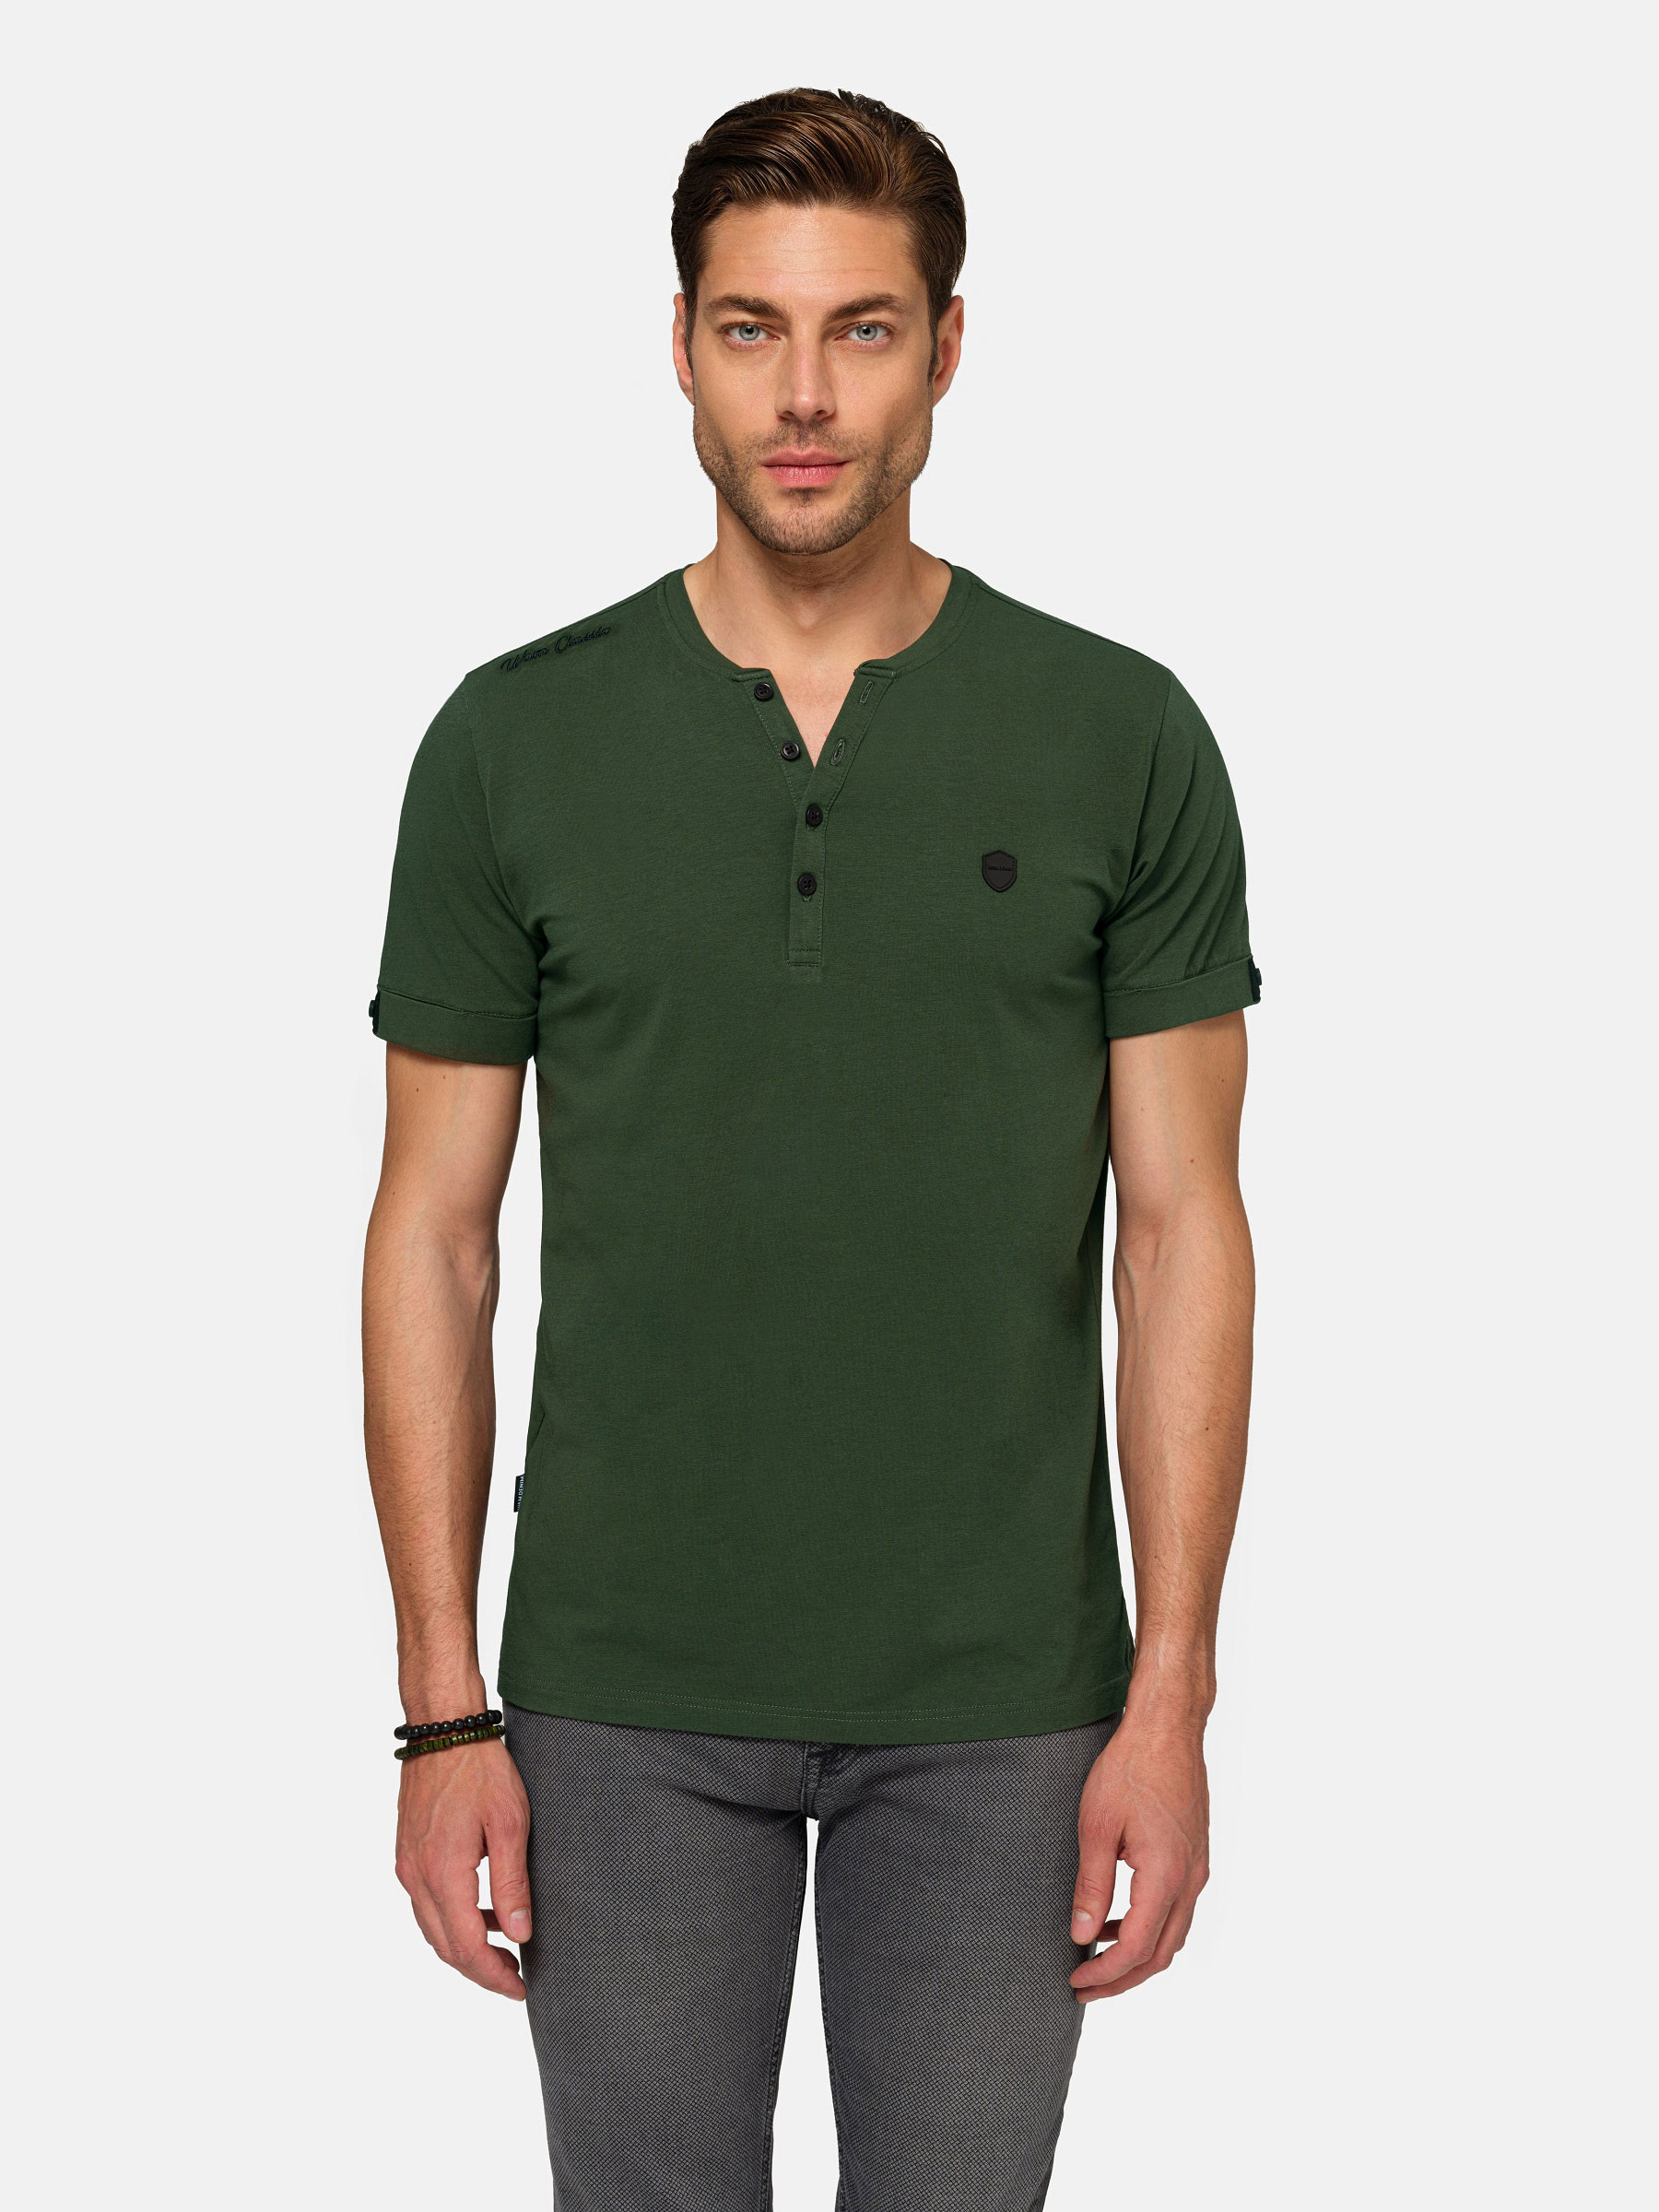 WAM Denim Korfual Casual V-neck button T-shirt Khaki -